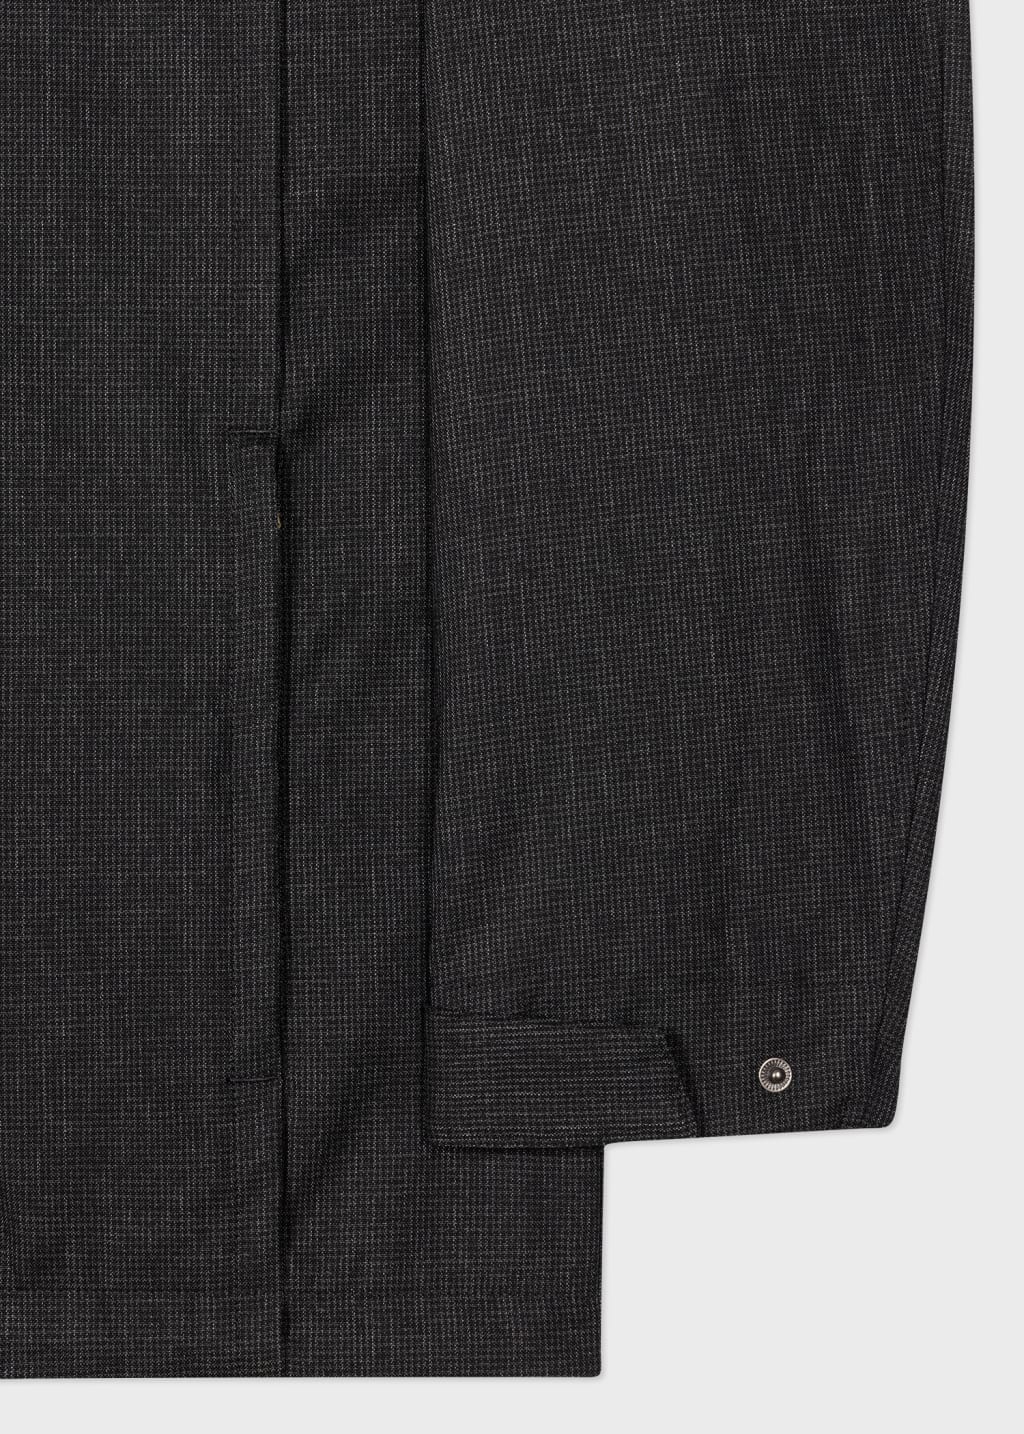 Detail View - Grey Mini Houndstooth Wool Zip Jacket Paul Smith